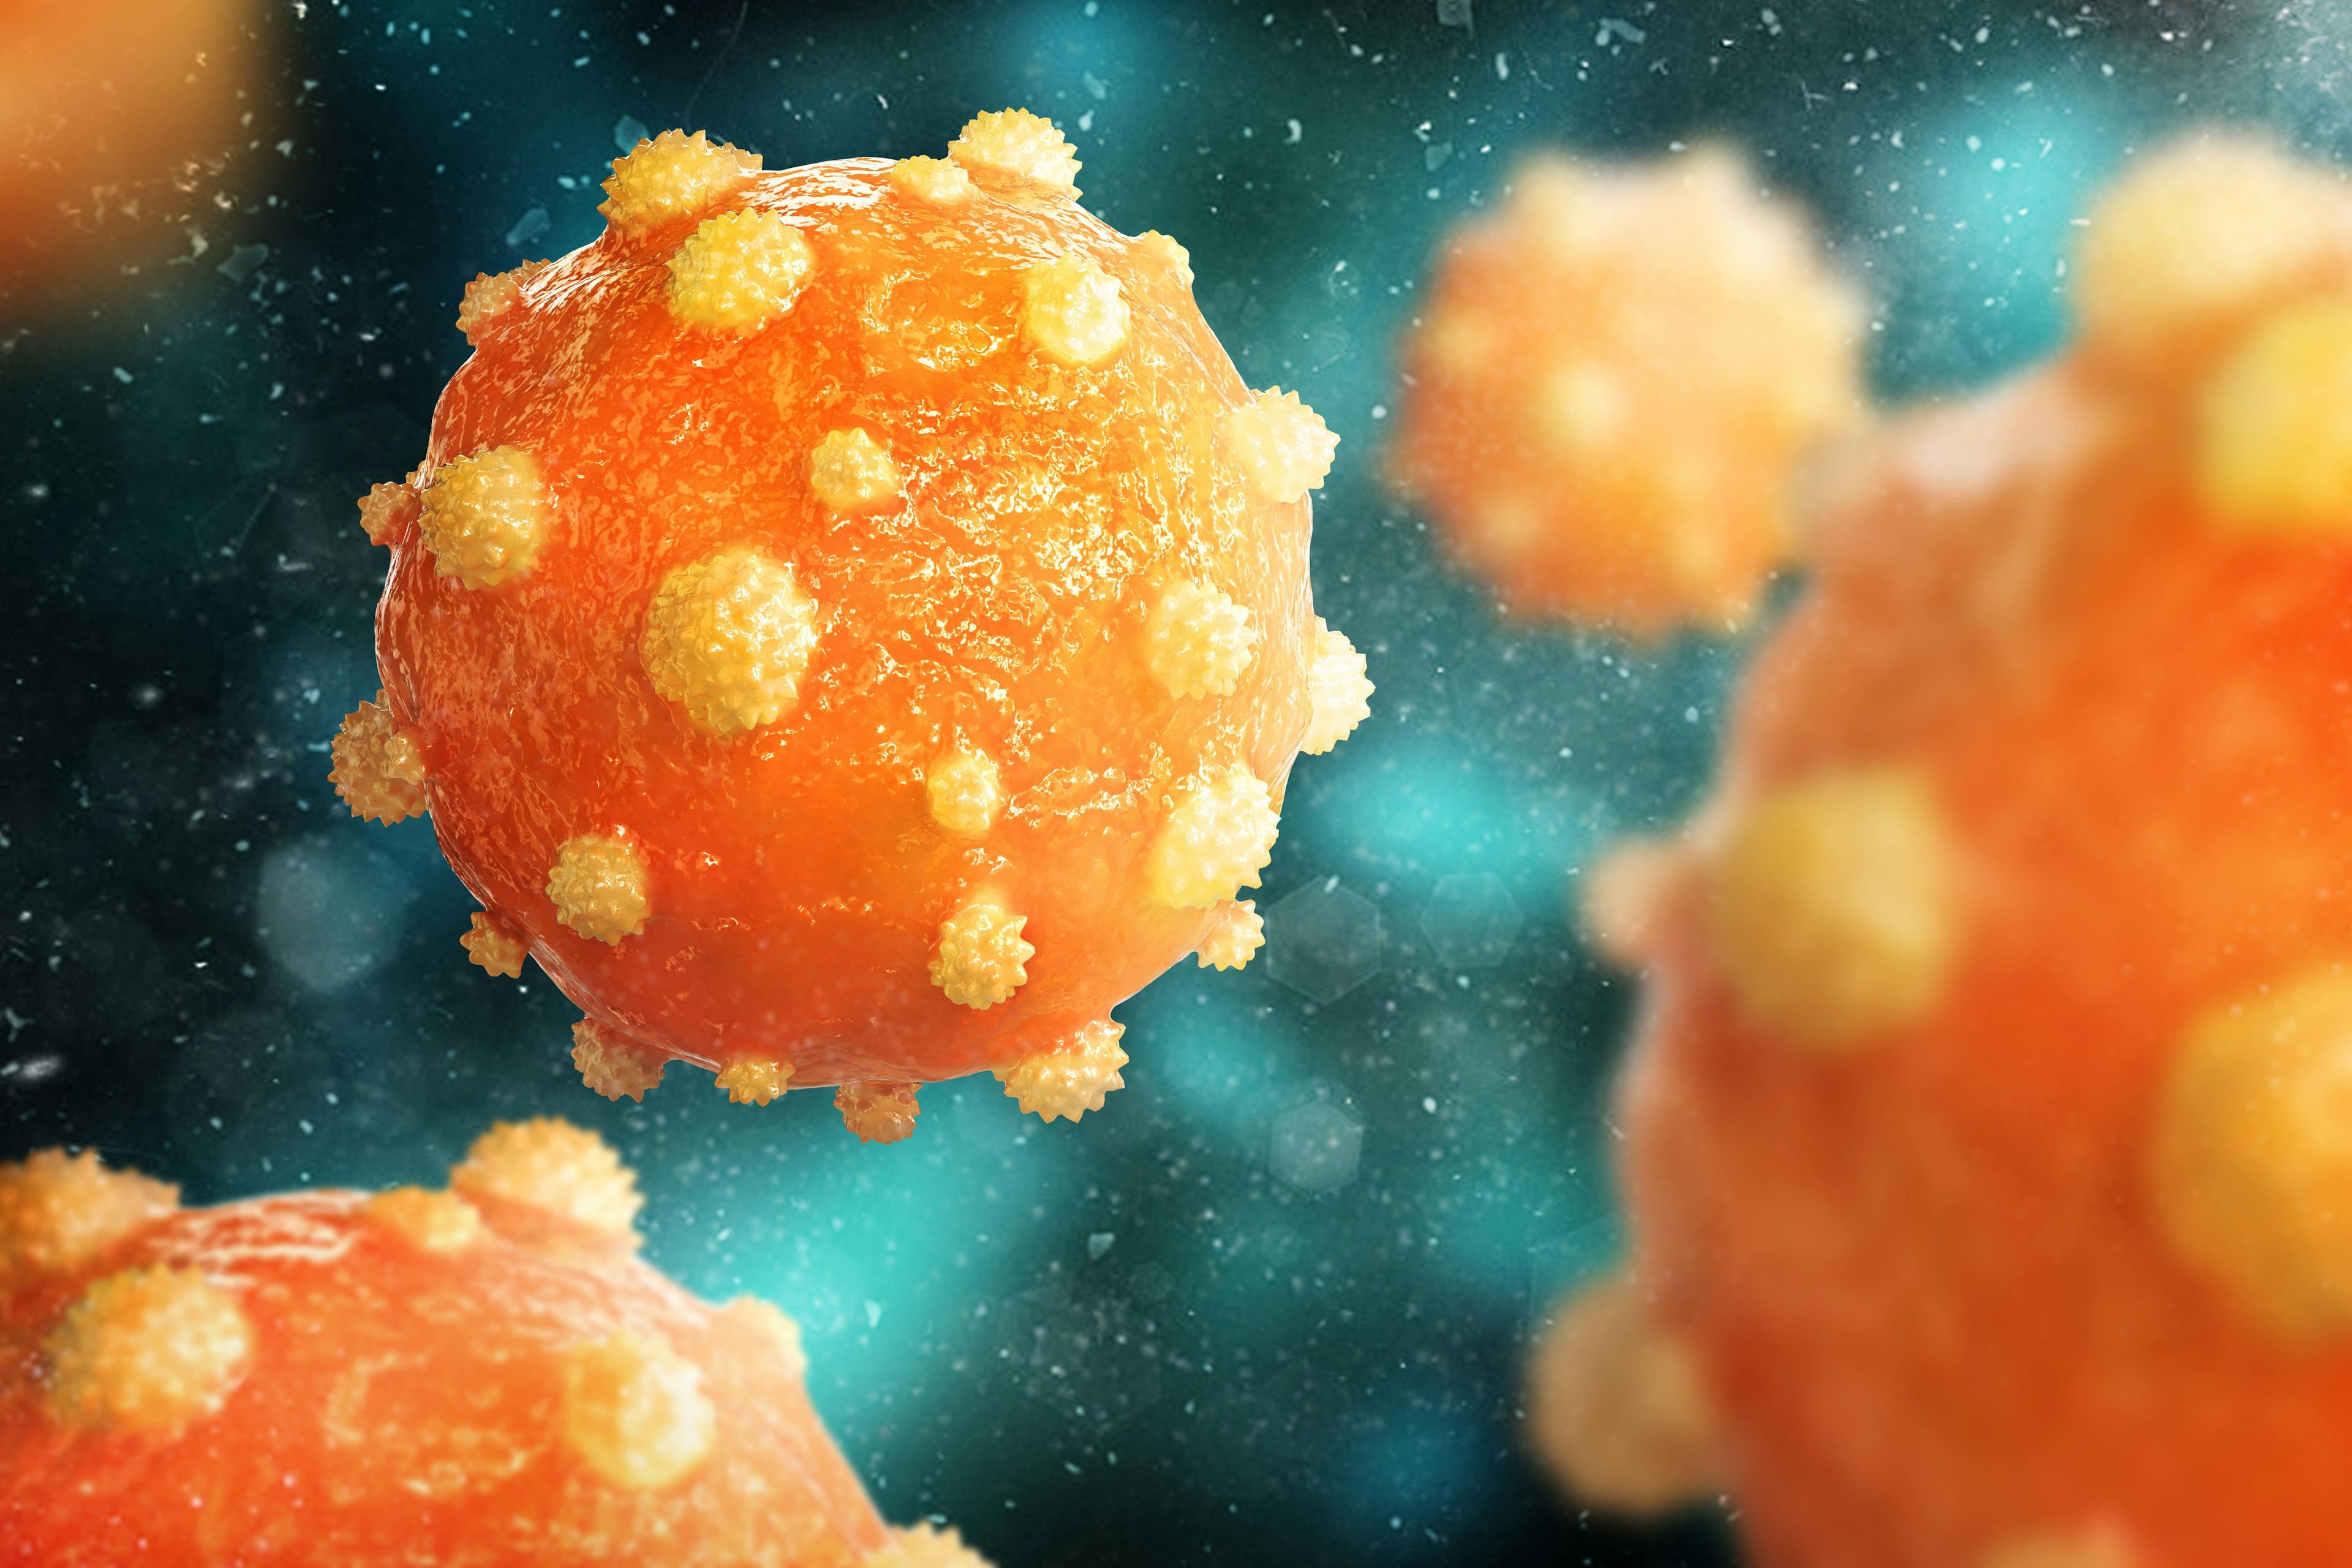 Hepatitis B virus on a white background. 3d illustration | Image Credit: sveta - stock.adobe.com